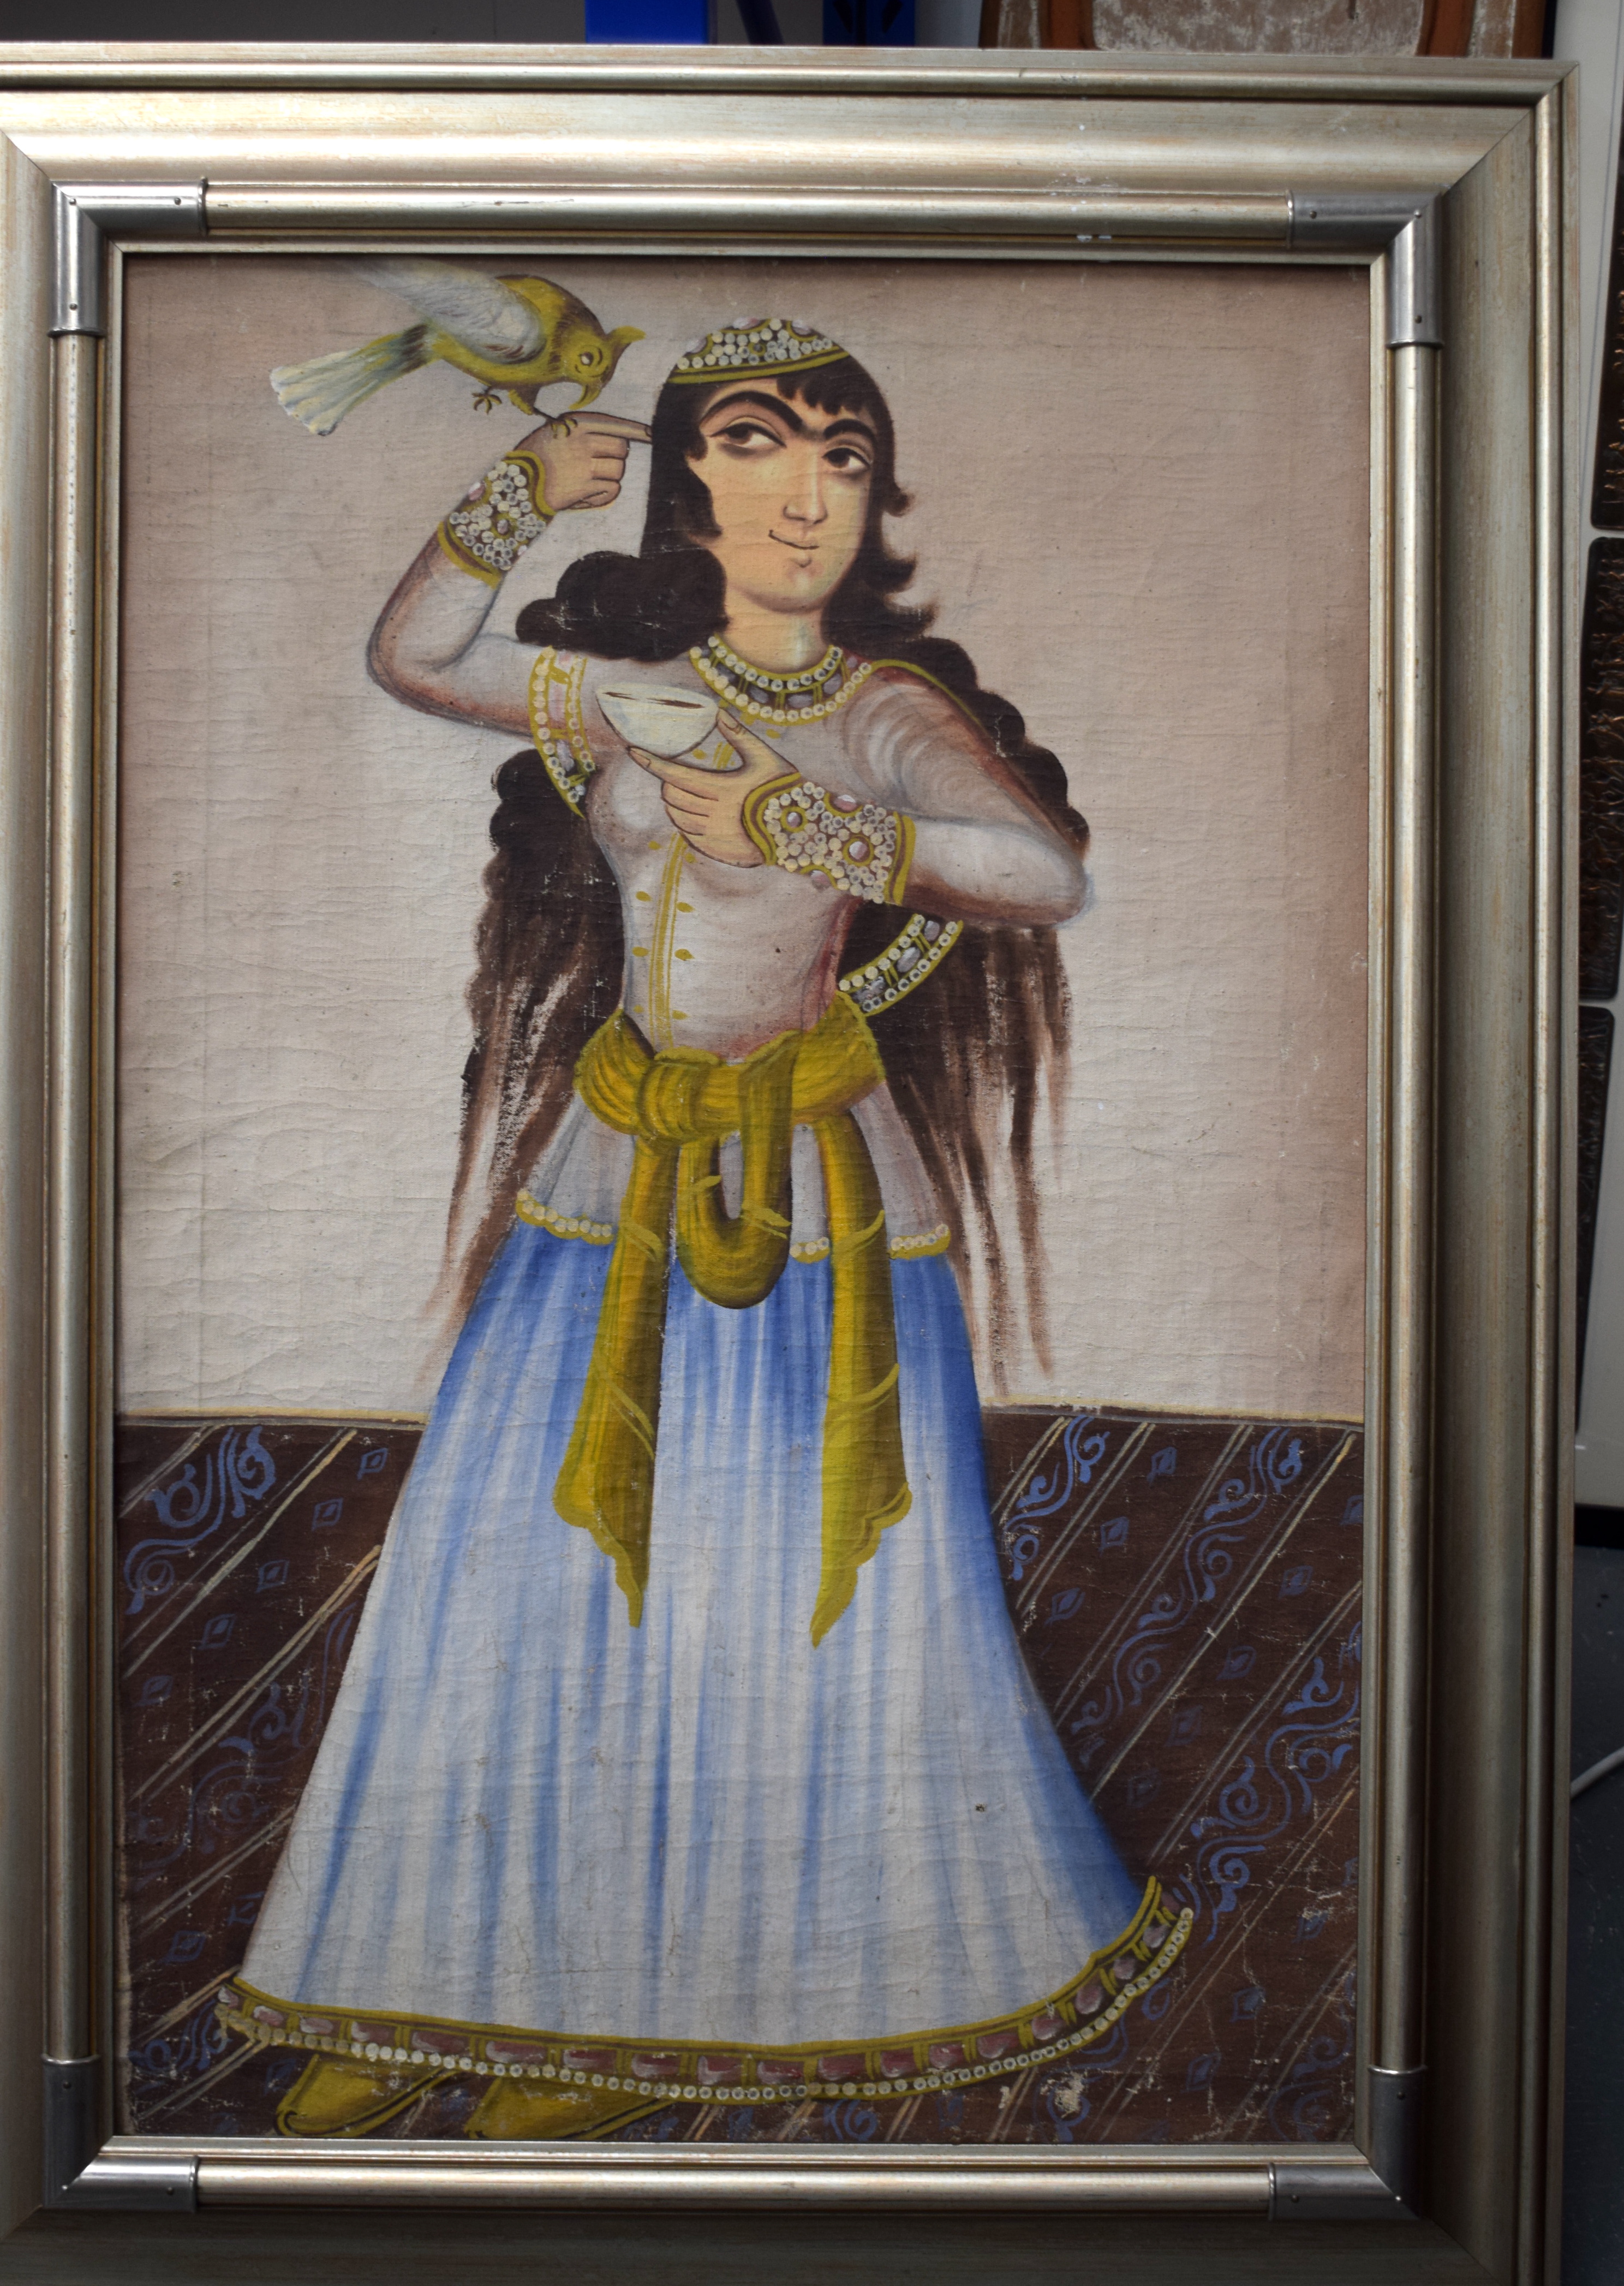 Persian School (20th Century) Qajar, oil on canvas. Image 89 cm x 59 cm.